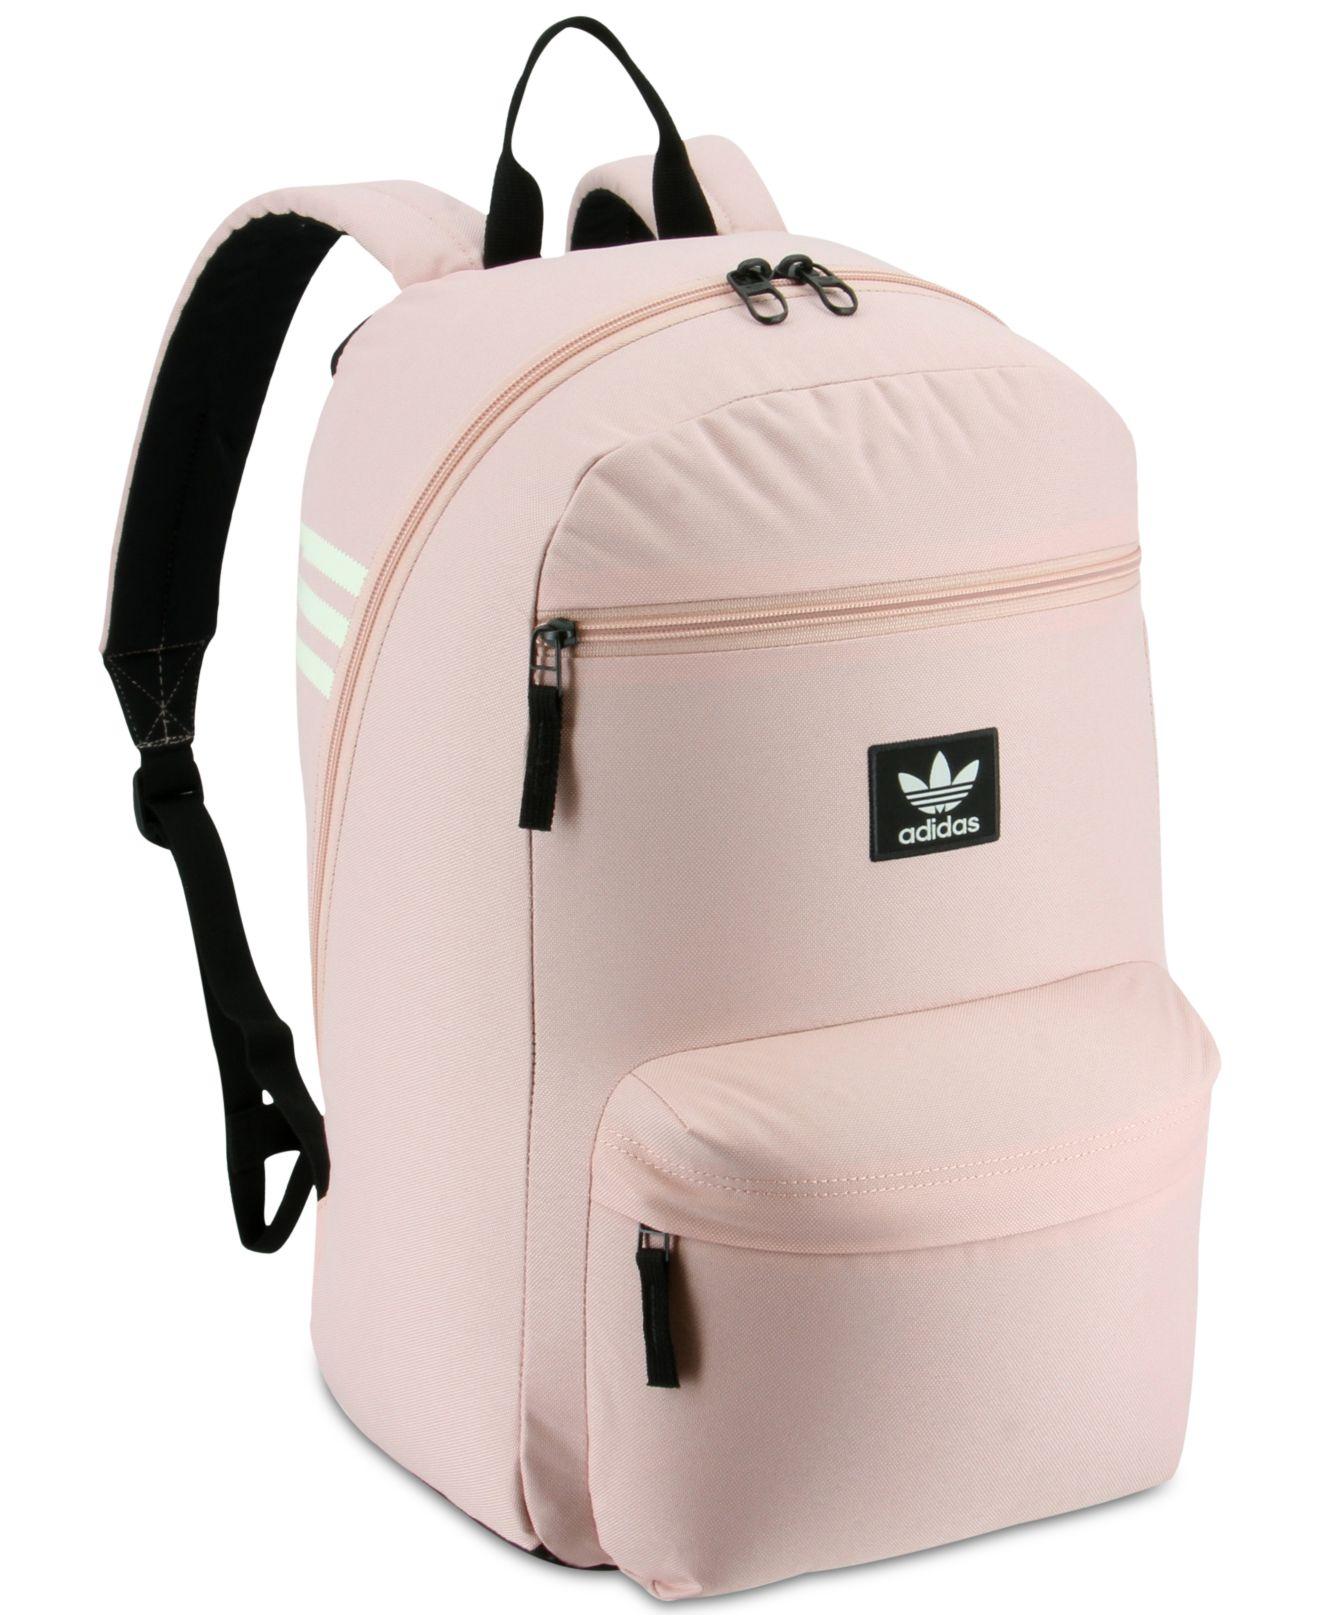 adidas originals national pink backpack